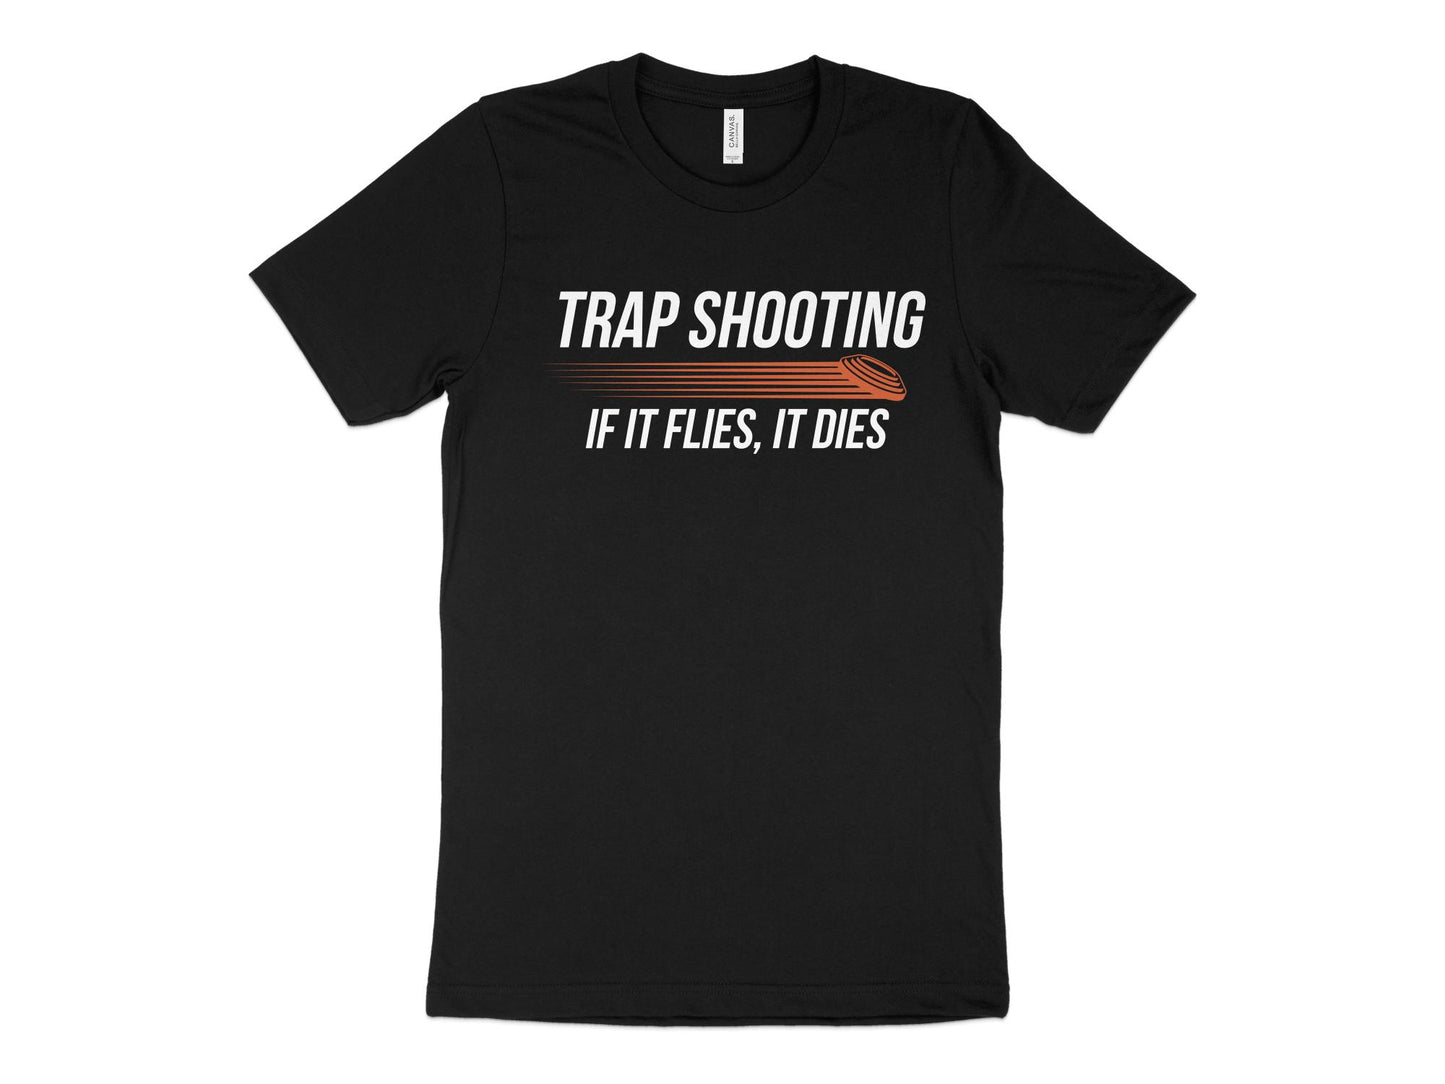 Trap Shooting Shirt, If It Flies It Dies, black